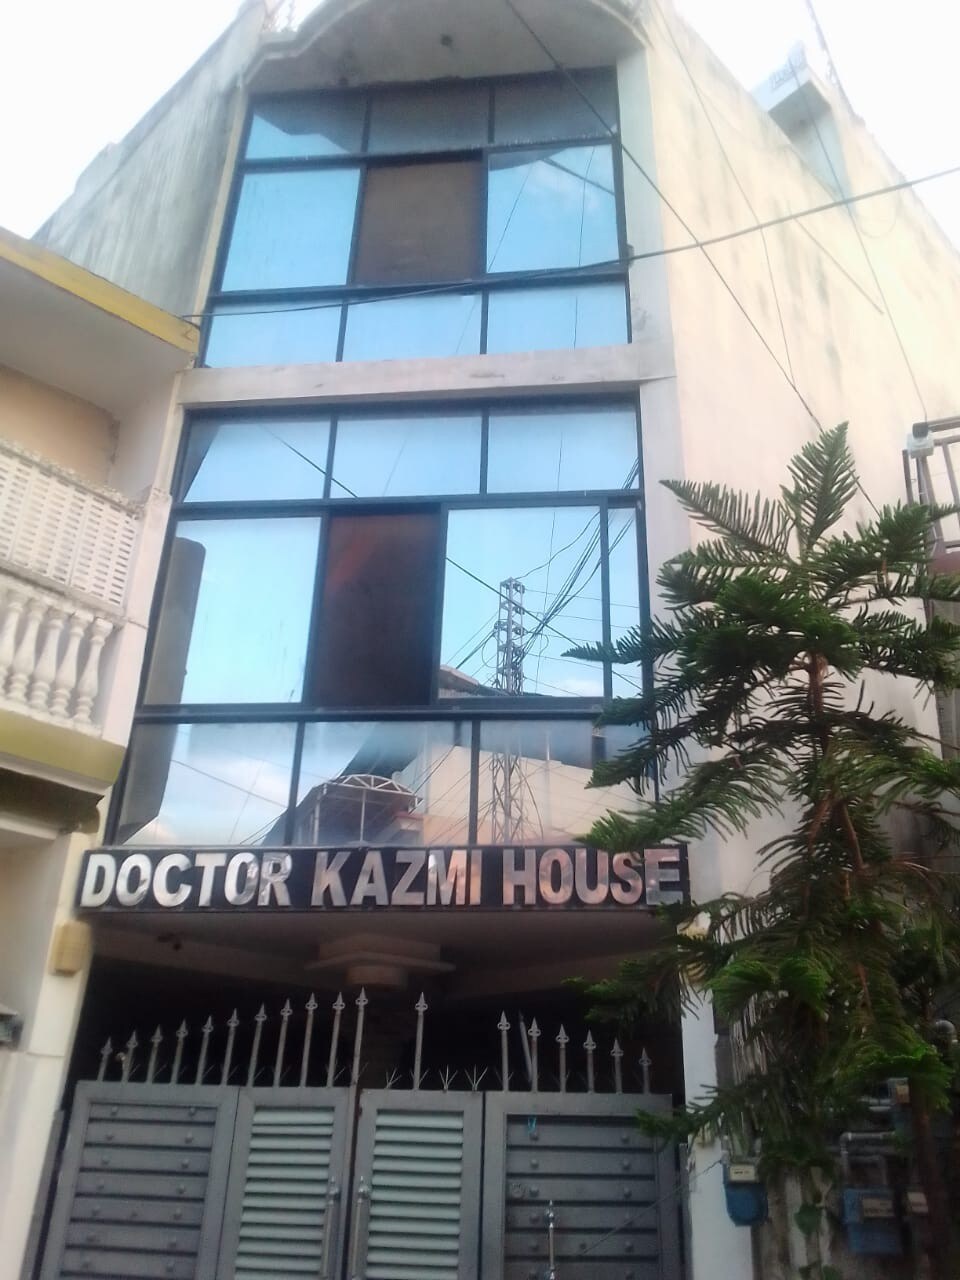 Dr Kazumi house